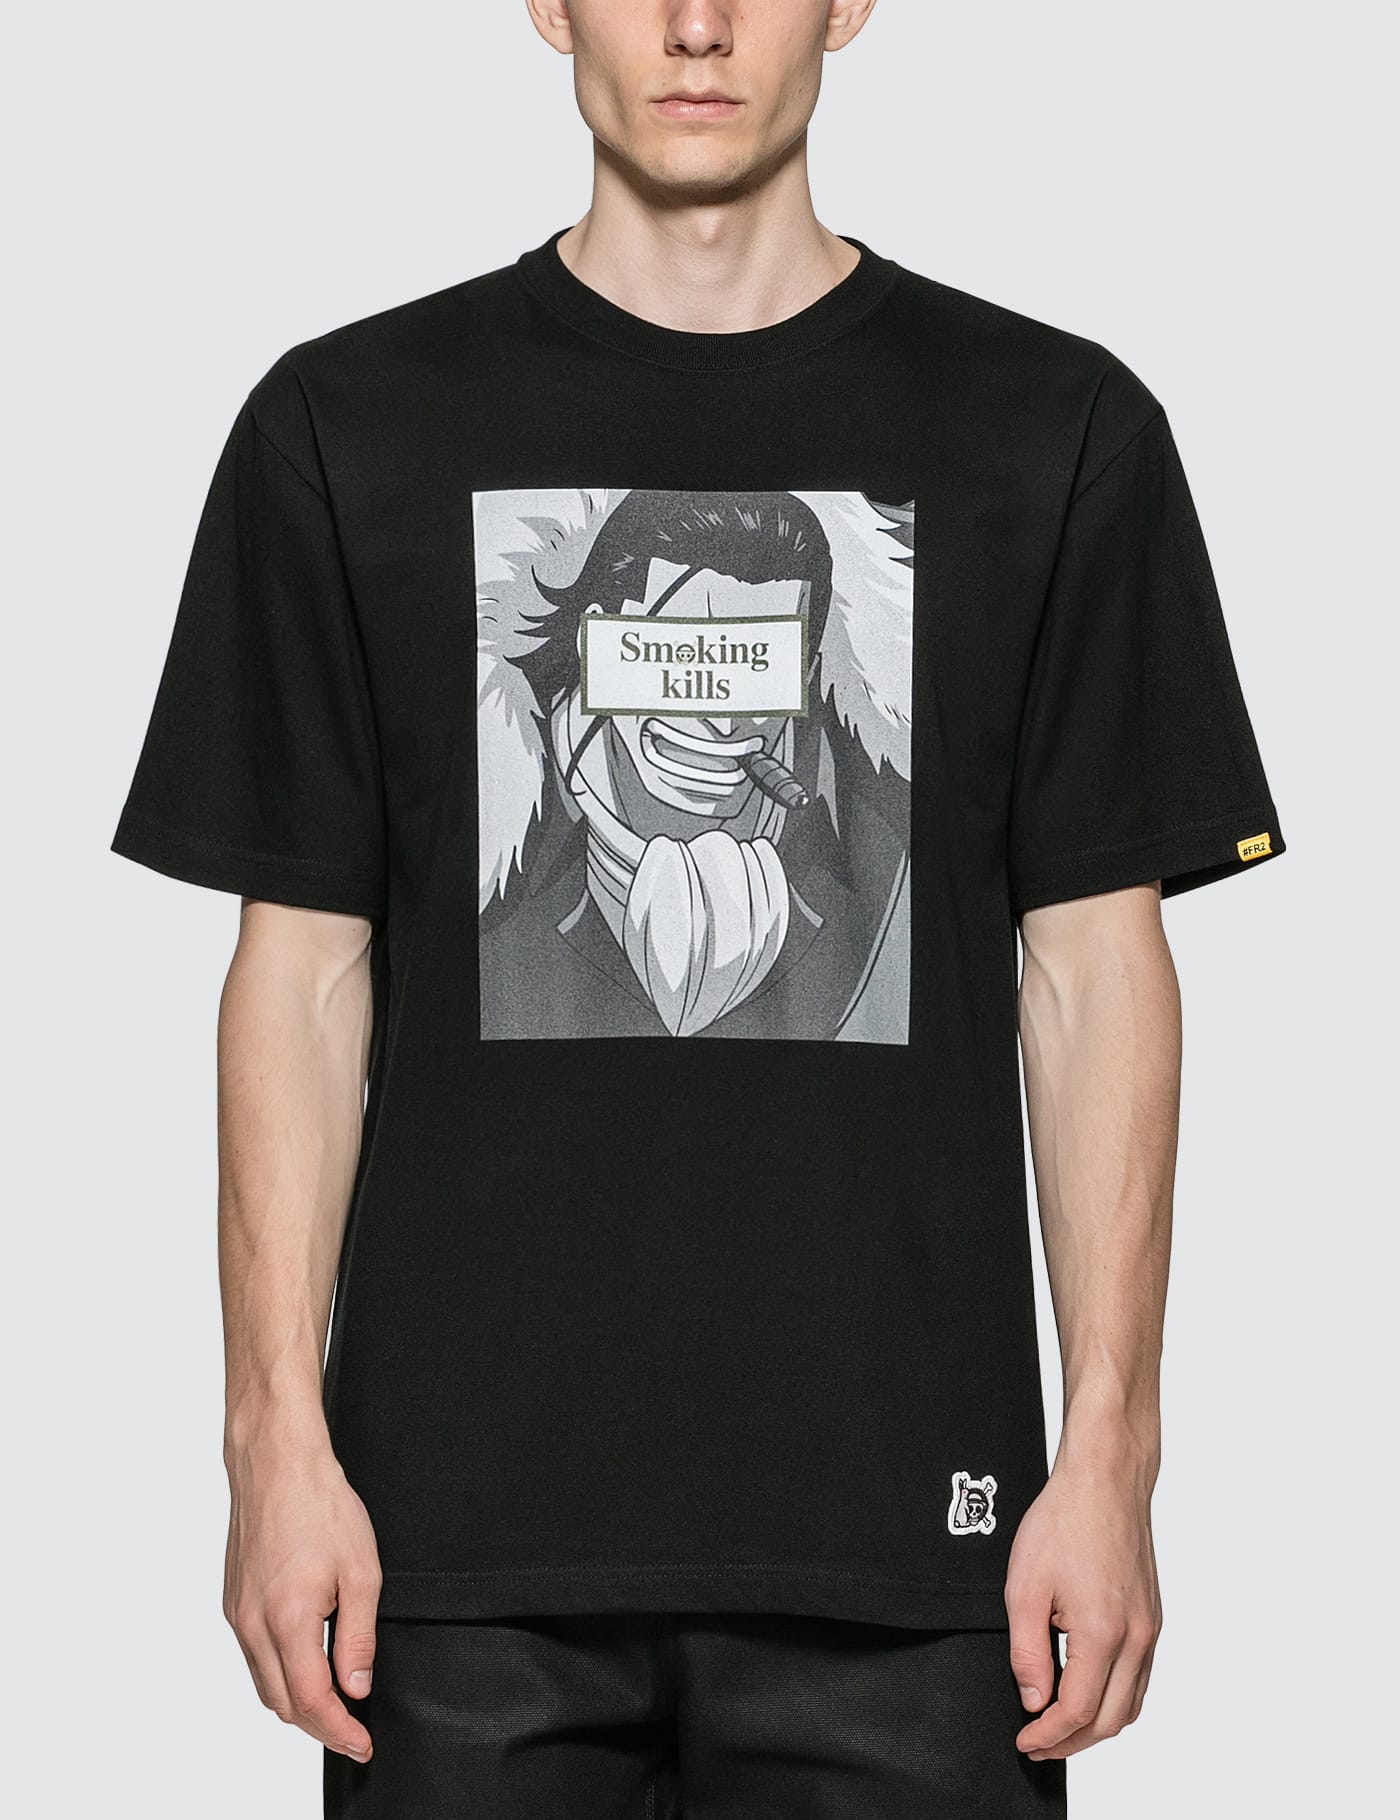 FR2 - #FR2 X One Piece Crocodile Smokers T-shirt | HBX - Globally